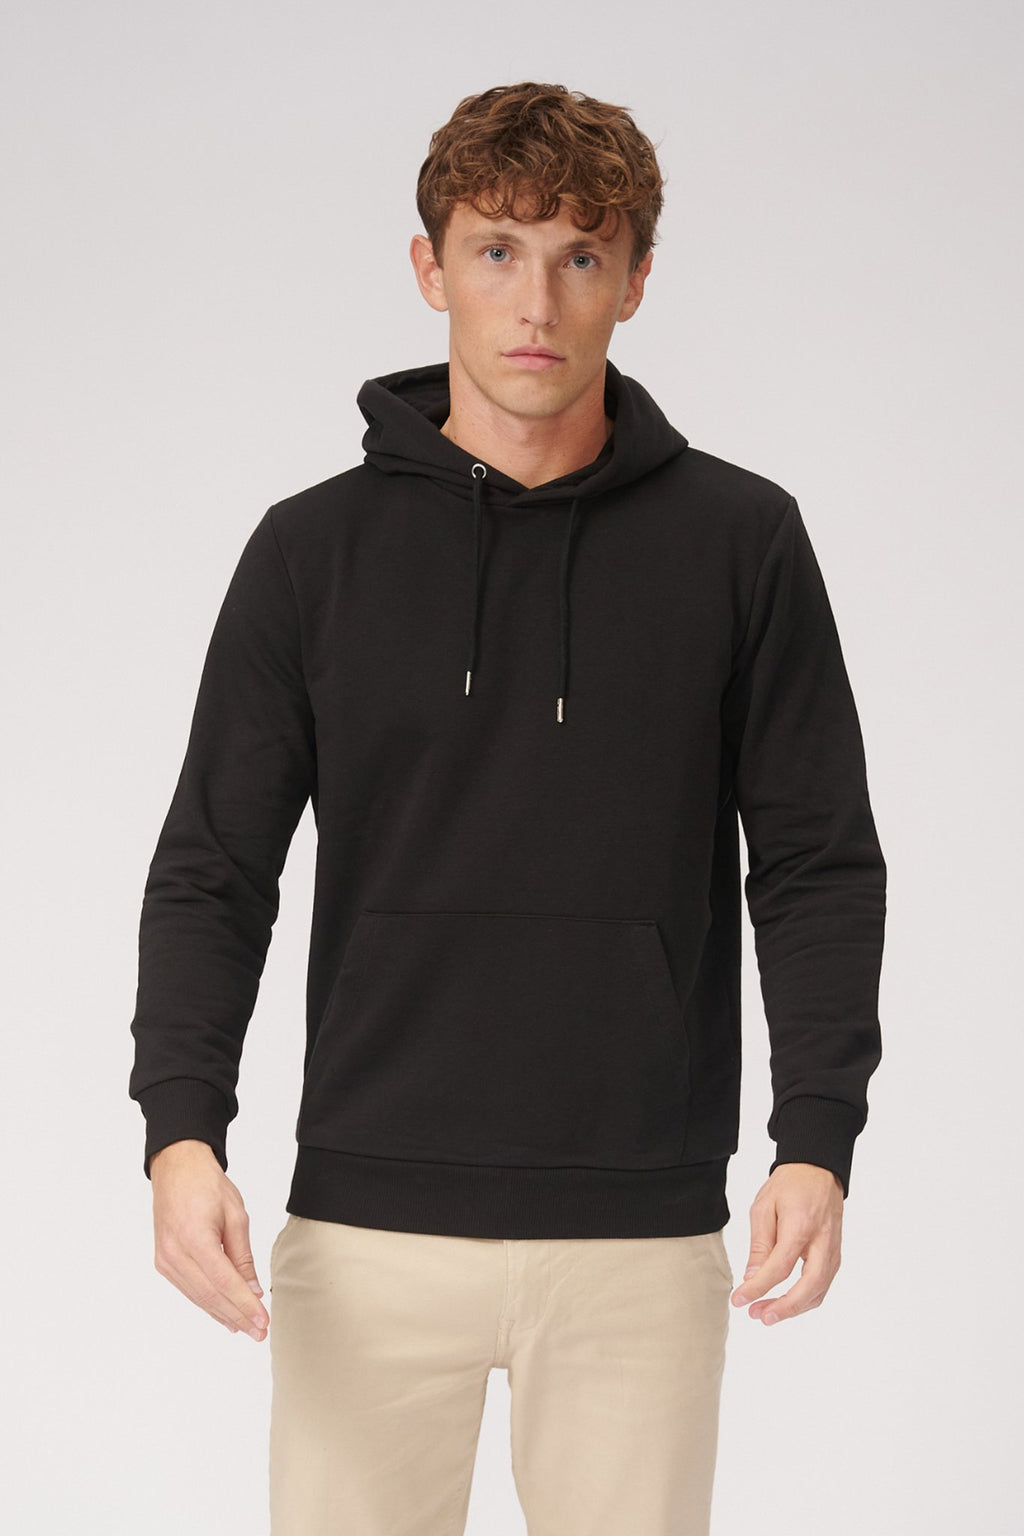 Basic Sweatsuit with Hoodie (Black) - Package Deal